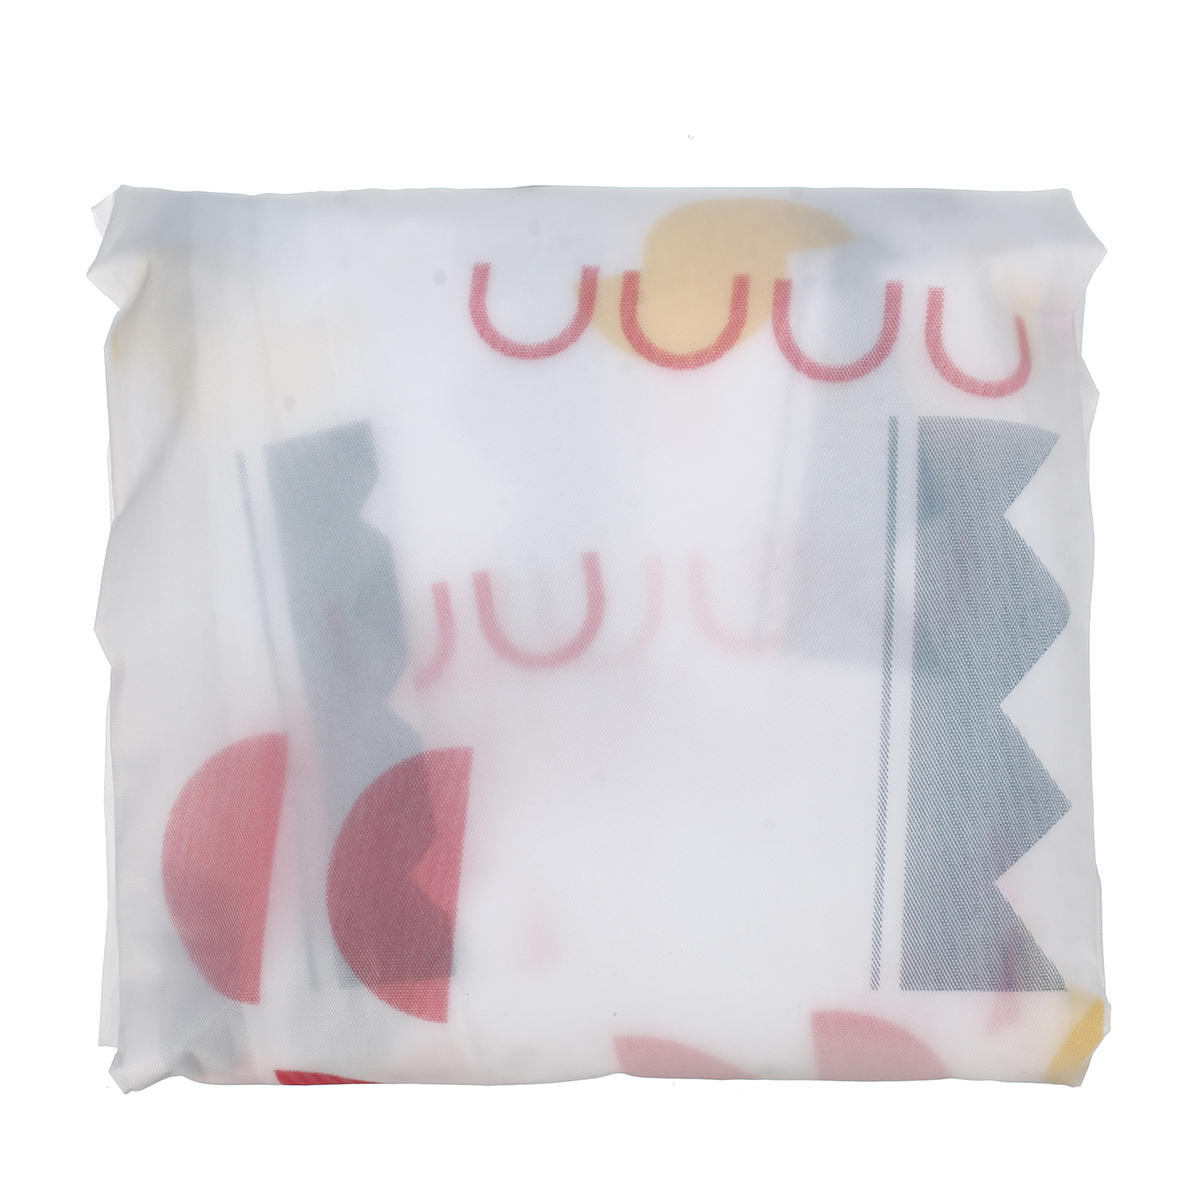 Drawstring Large Bag Dustproof Quilt Pouch Clothes Storage Laundry Organizer Bag